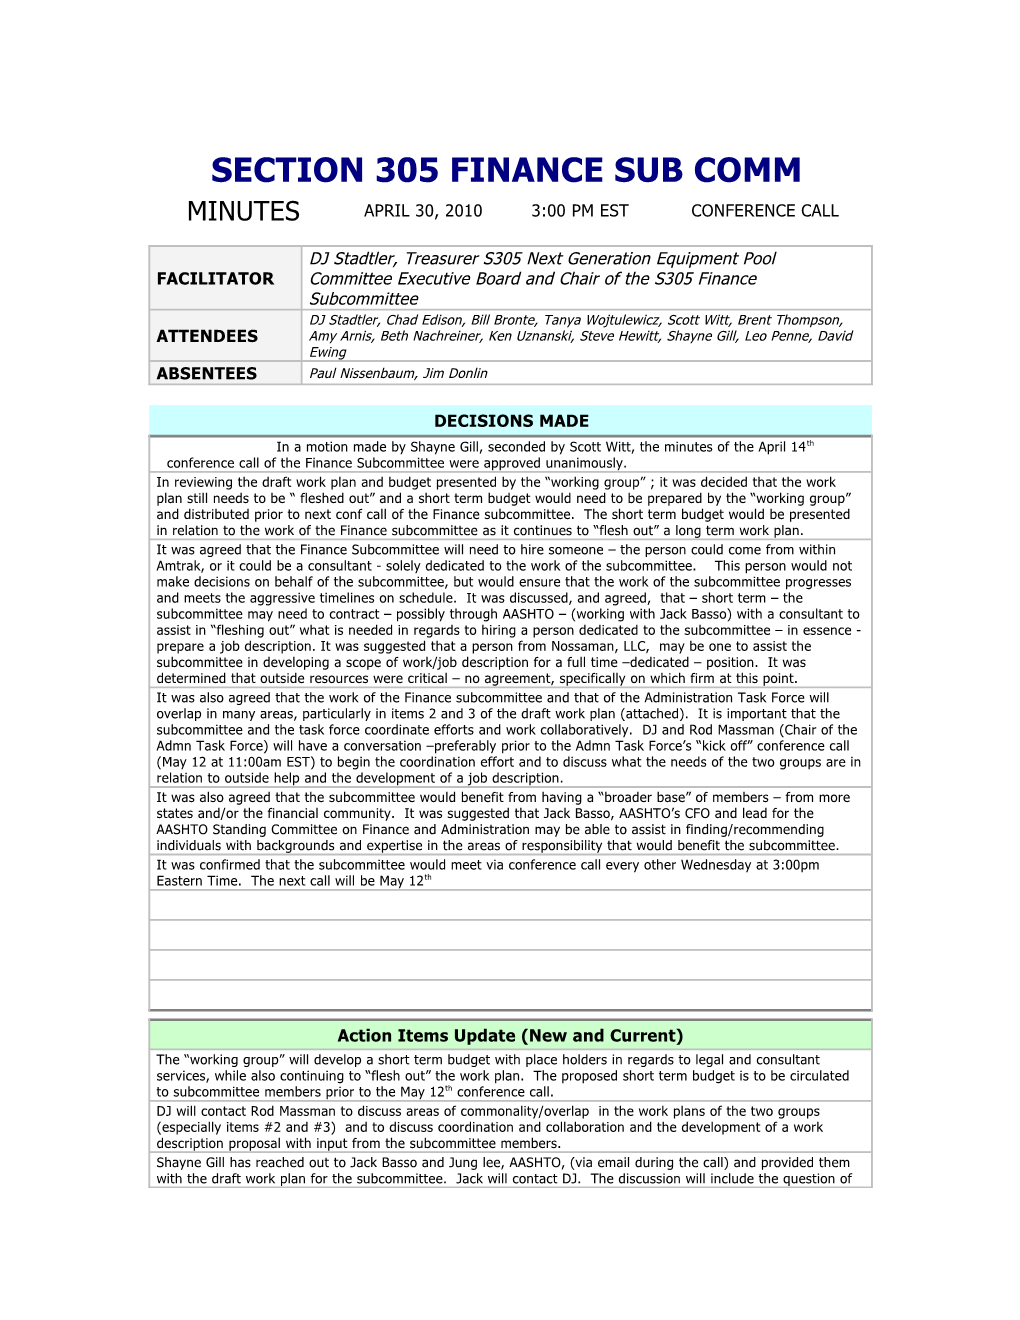 Section 305 Tech Sub Comm s15